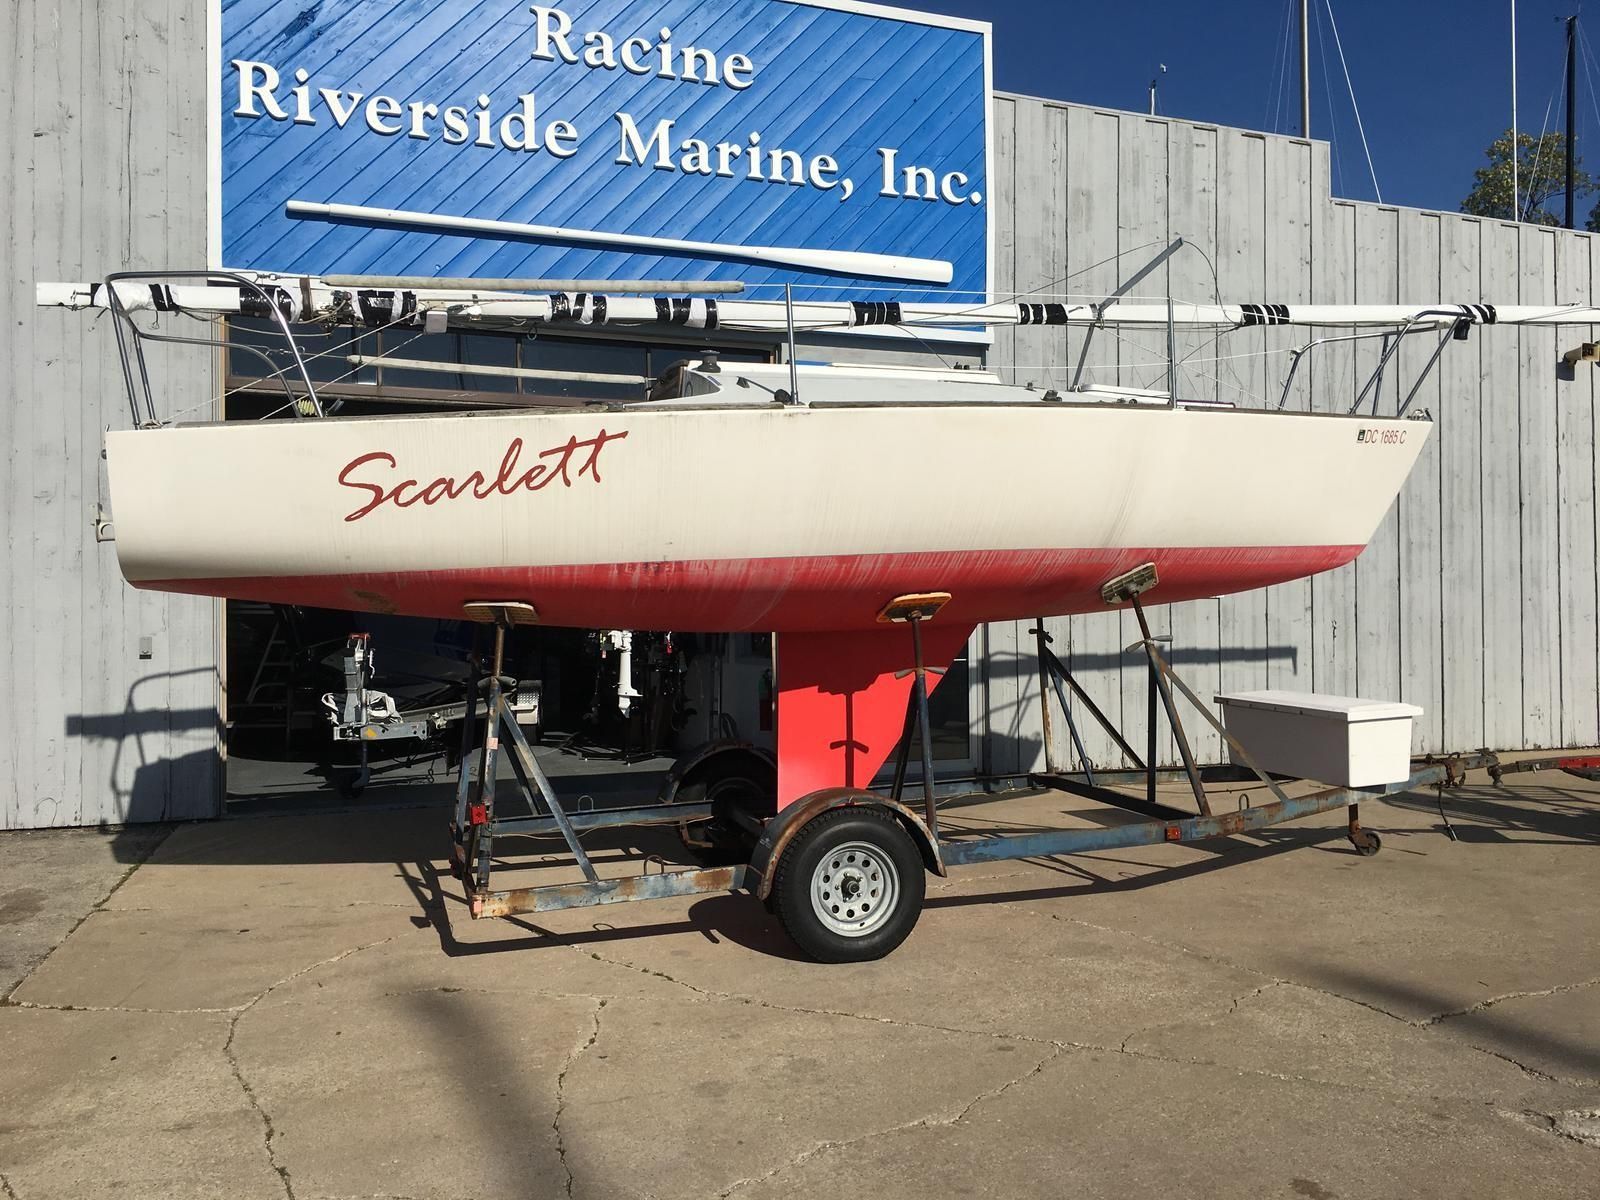 j24 sailboat for sale